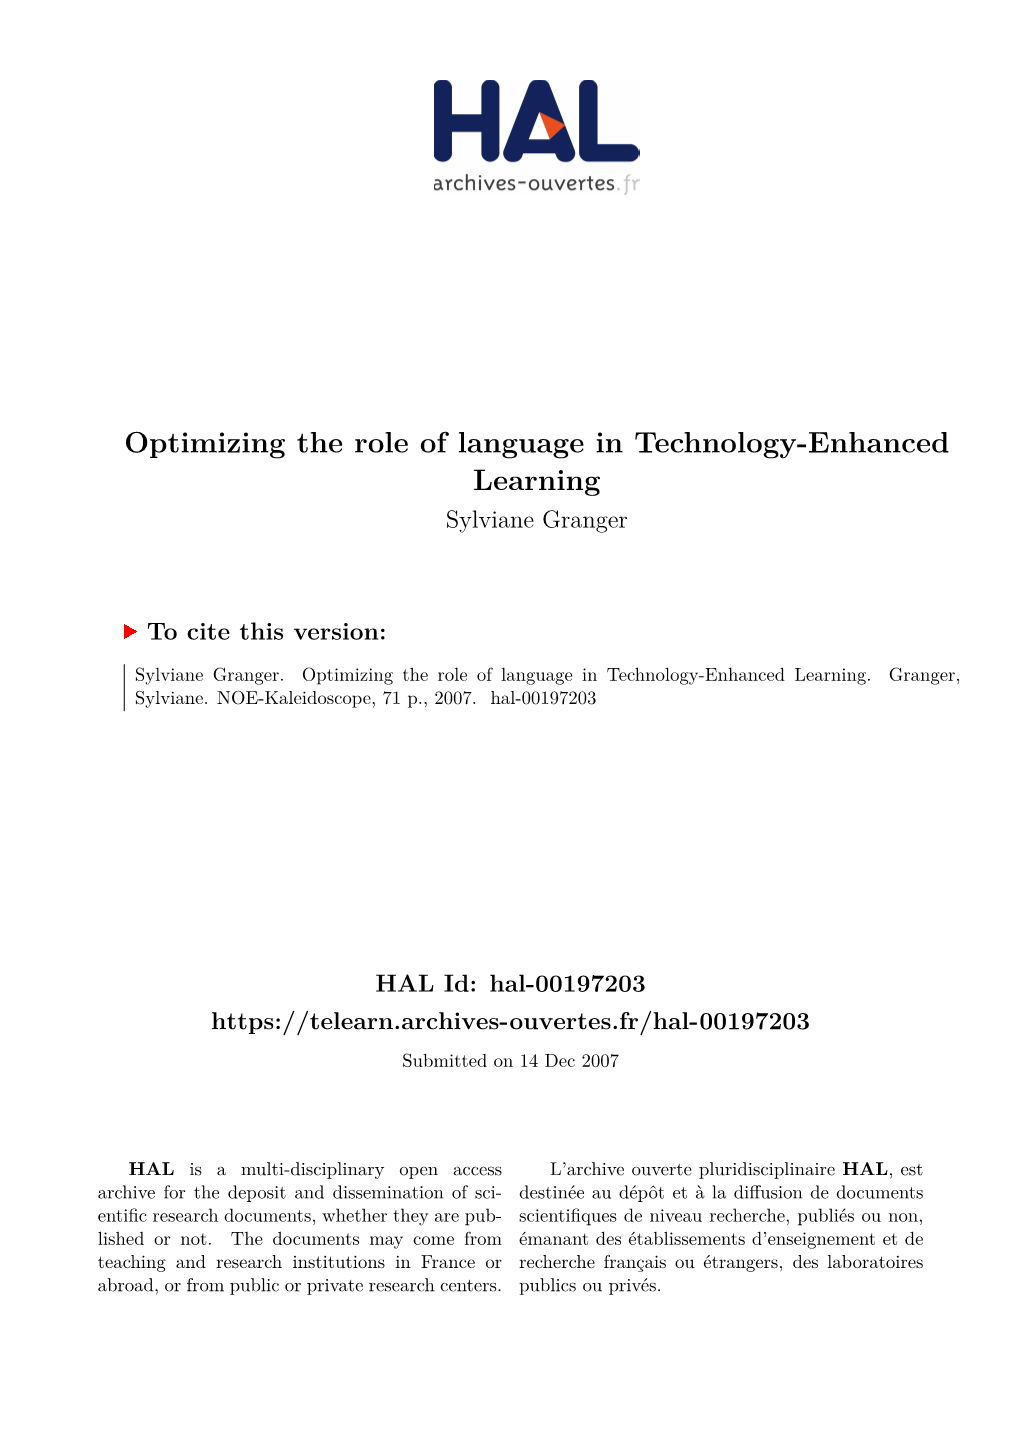 Optimizing the Role of Language in Technology-Enhanced Learning Sylviane Granger